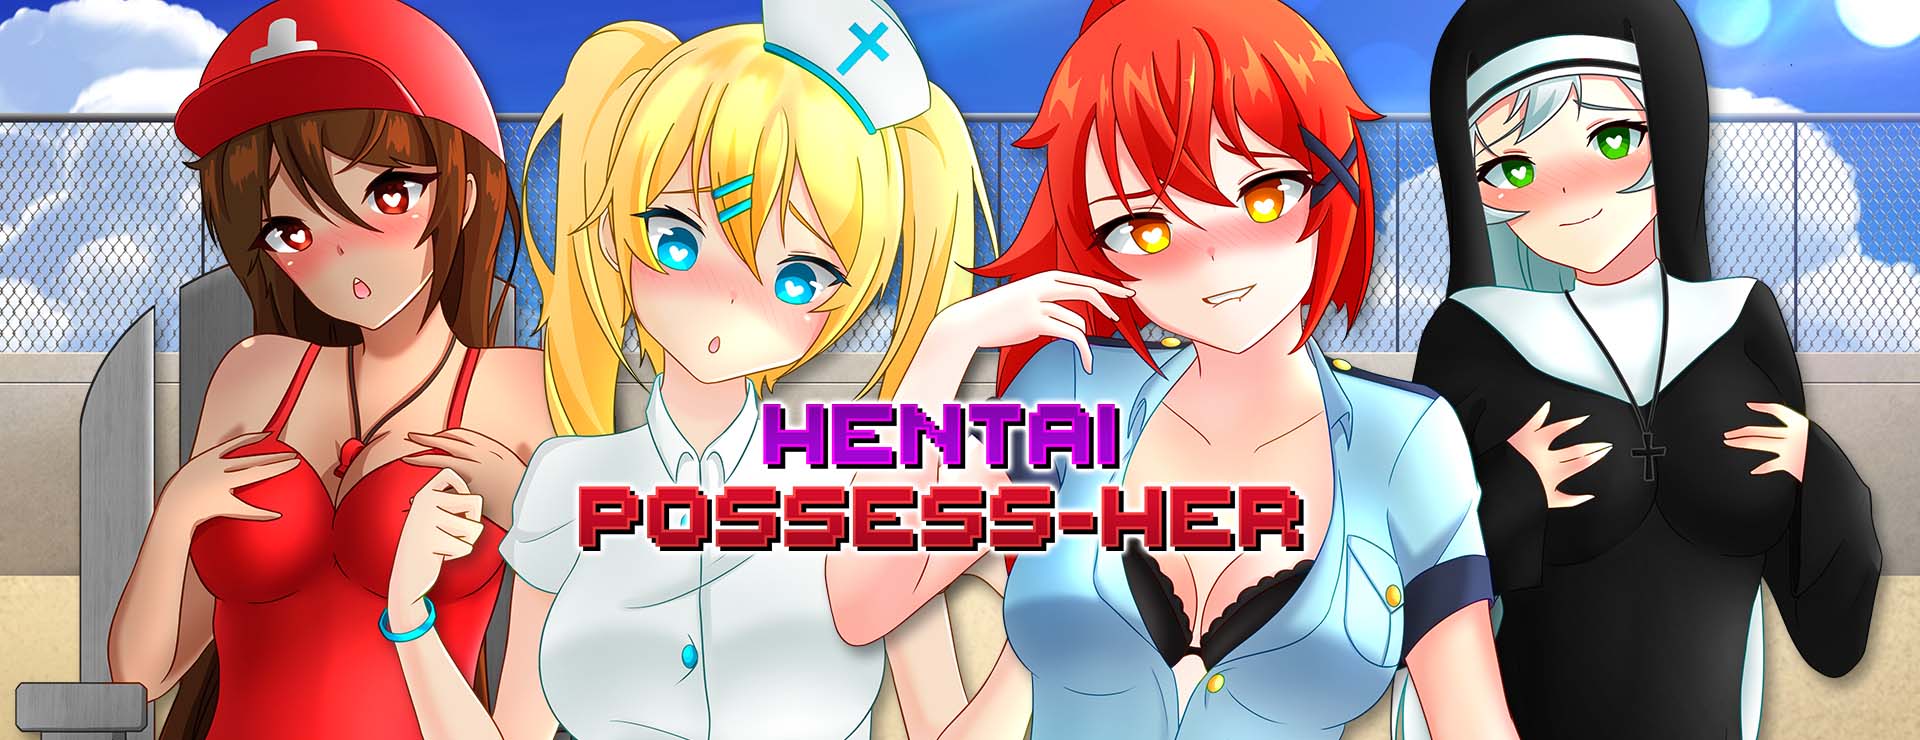 Hentai Possess-Her - Casual Game